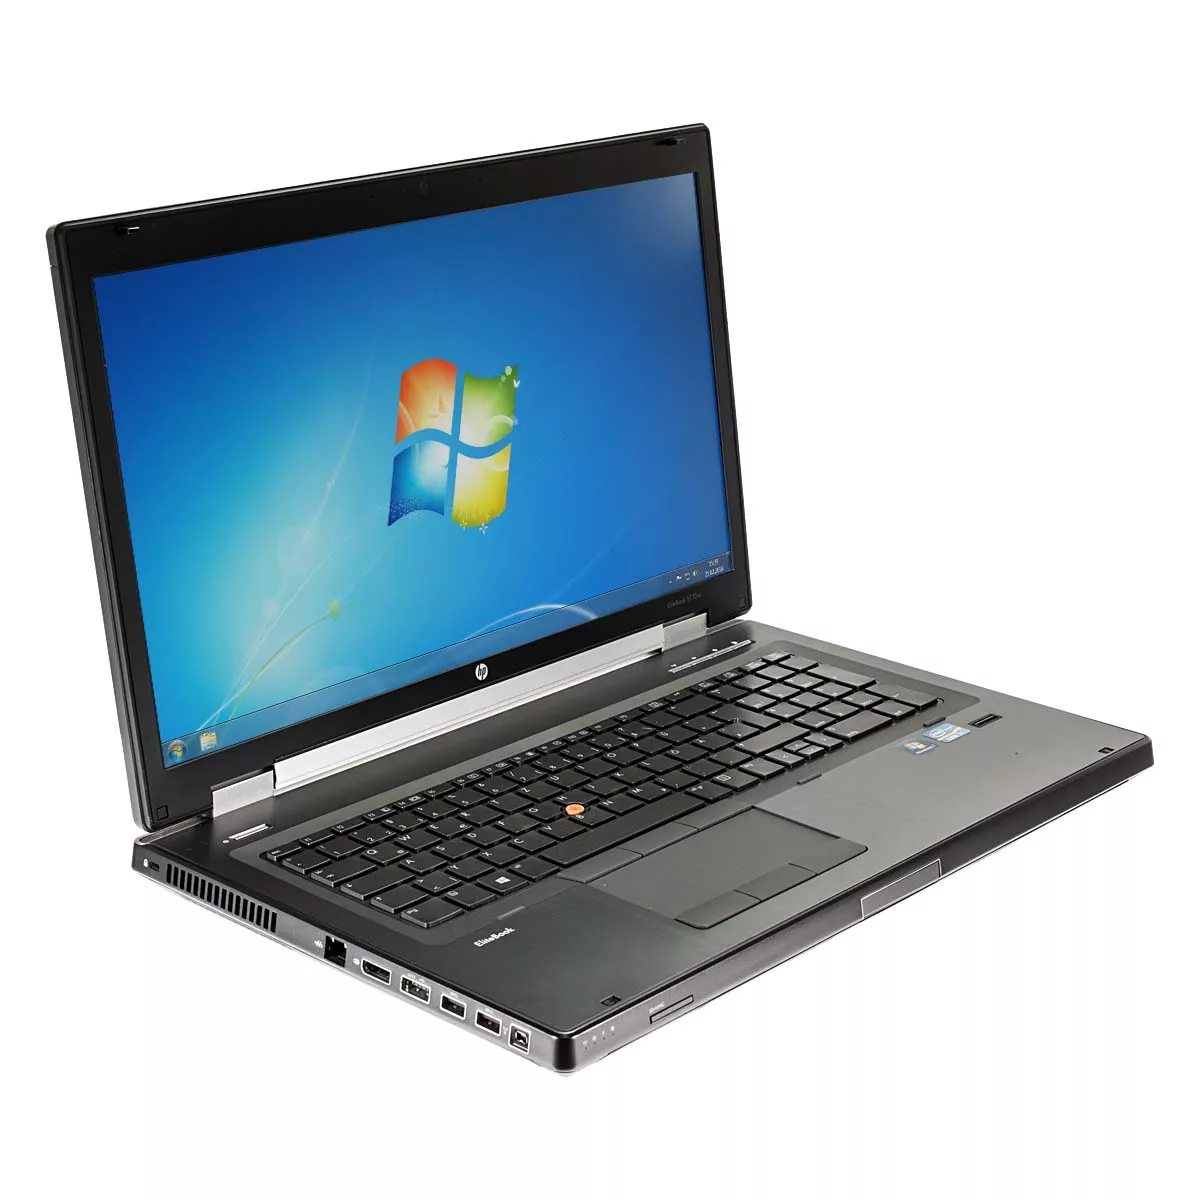 HP Elitebook 8760w Core i7 2670QM nVidia Quadro 3000M 8 GB 500 GB HDD Webcam